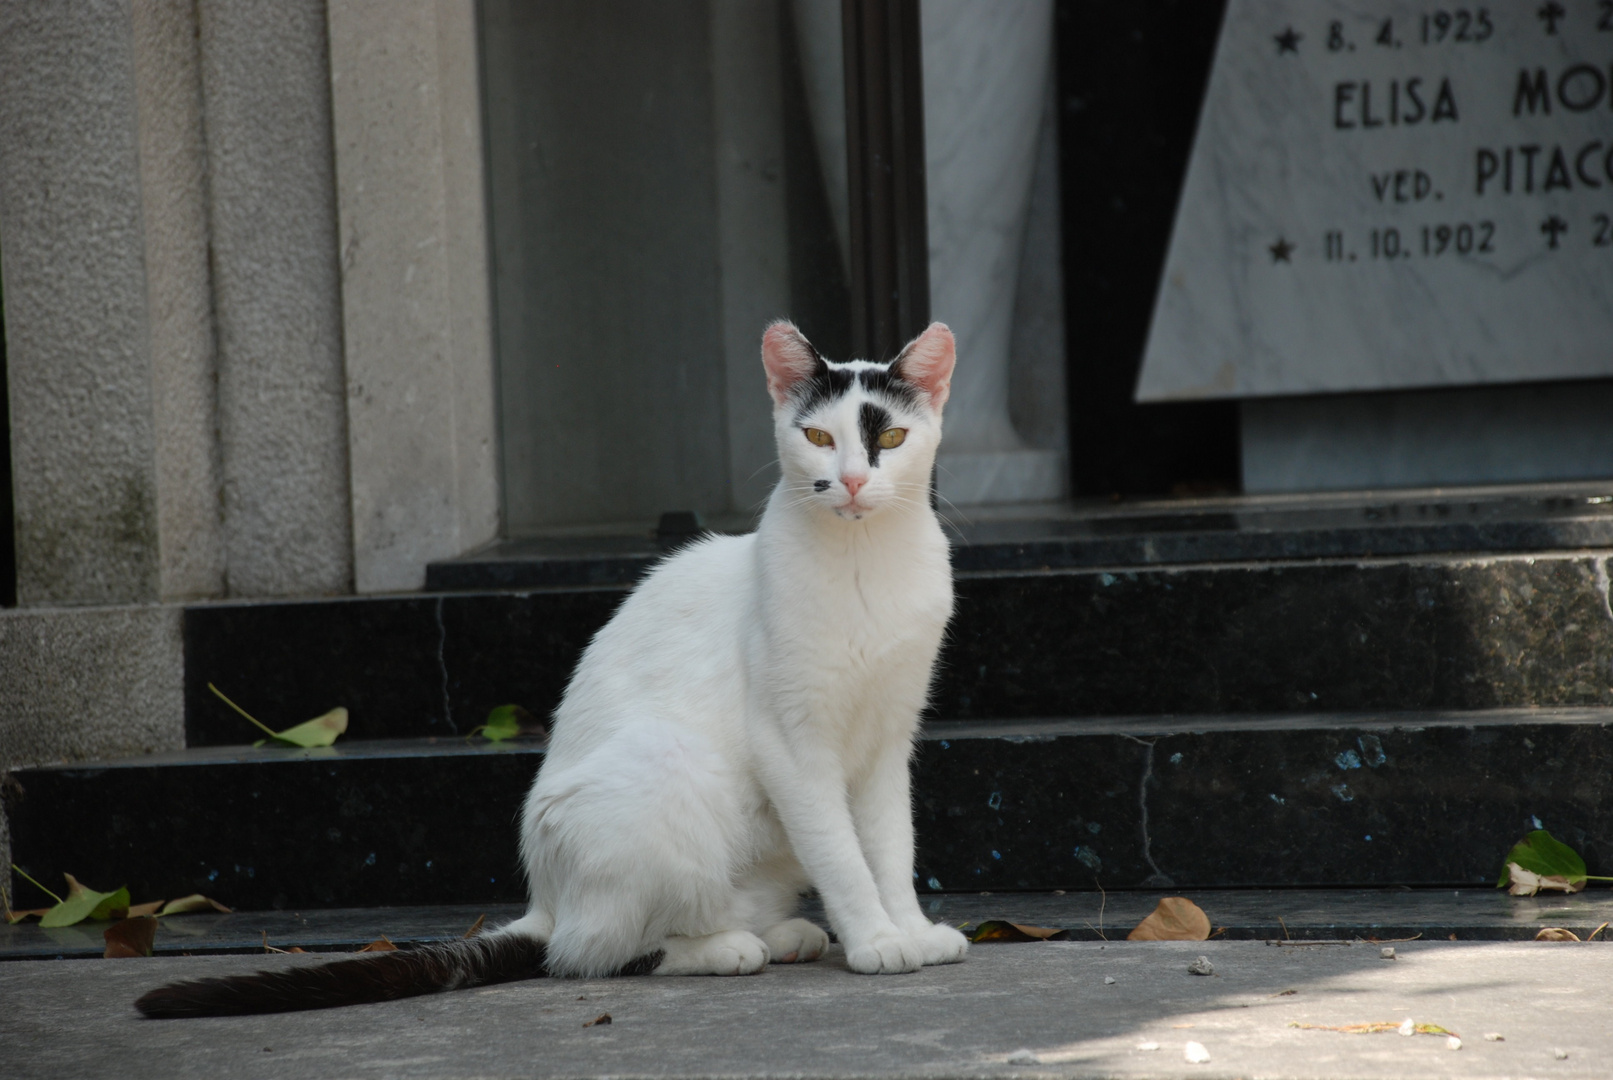 A cemetery cat